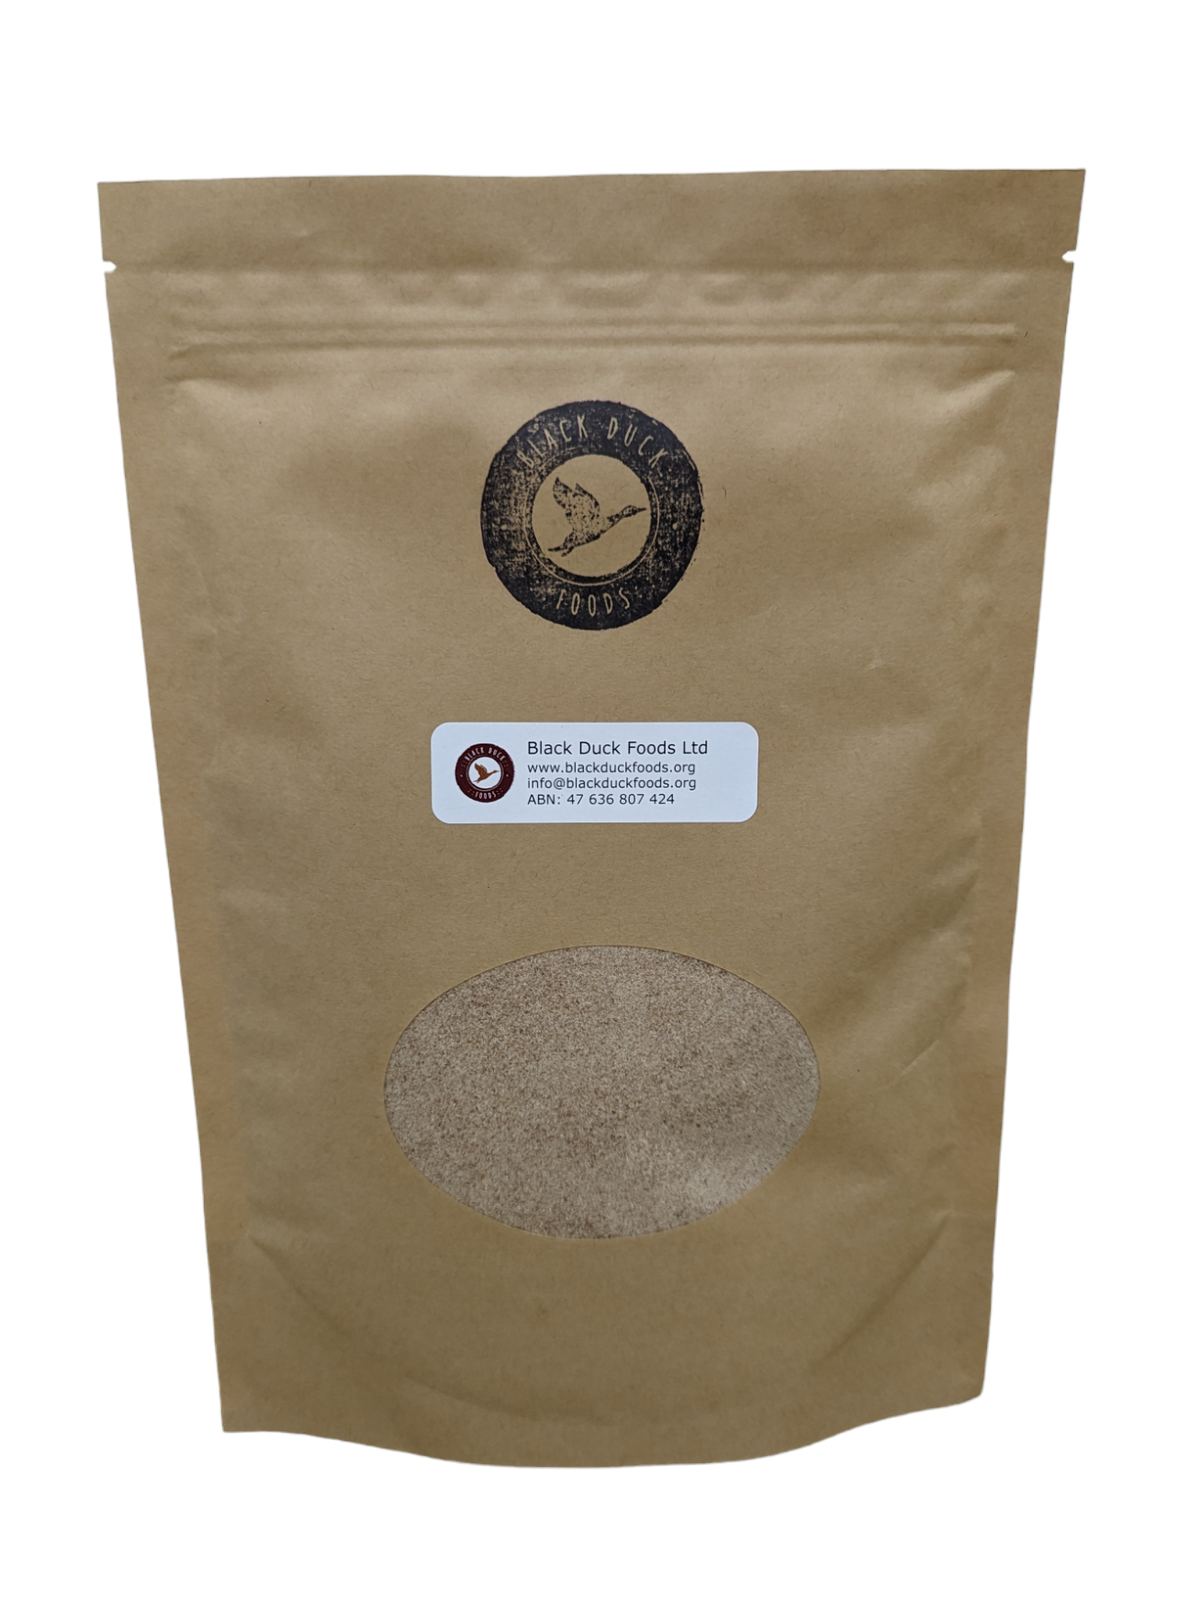 Native Flour - Mitchell and Button Grass/Grain